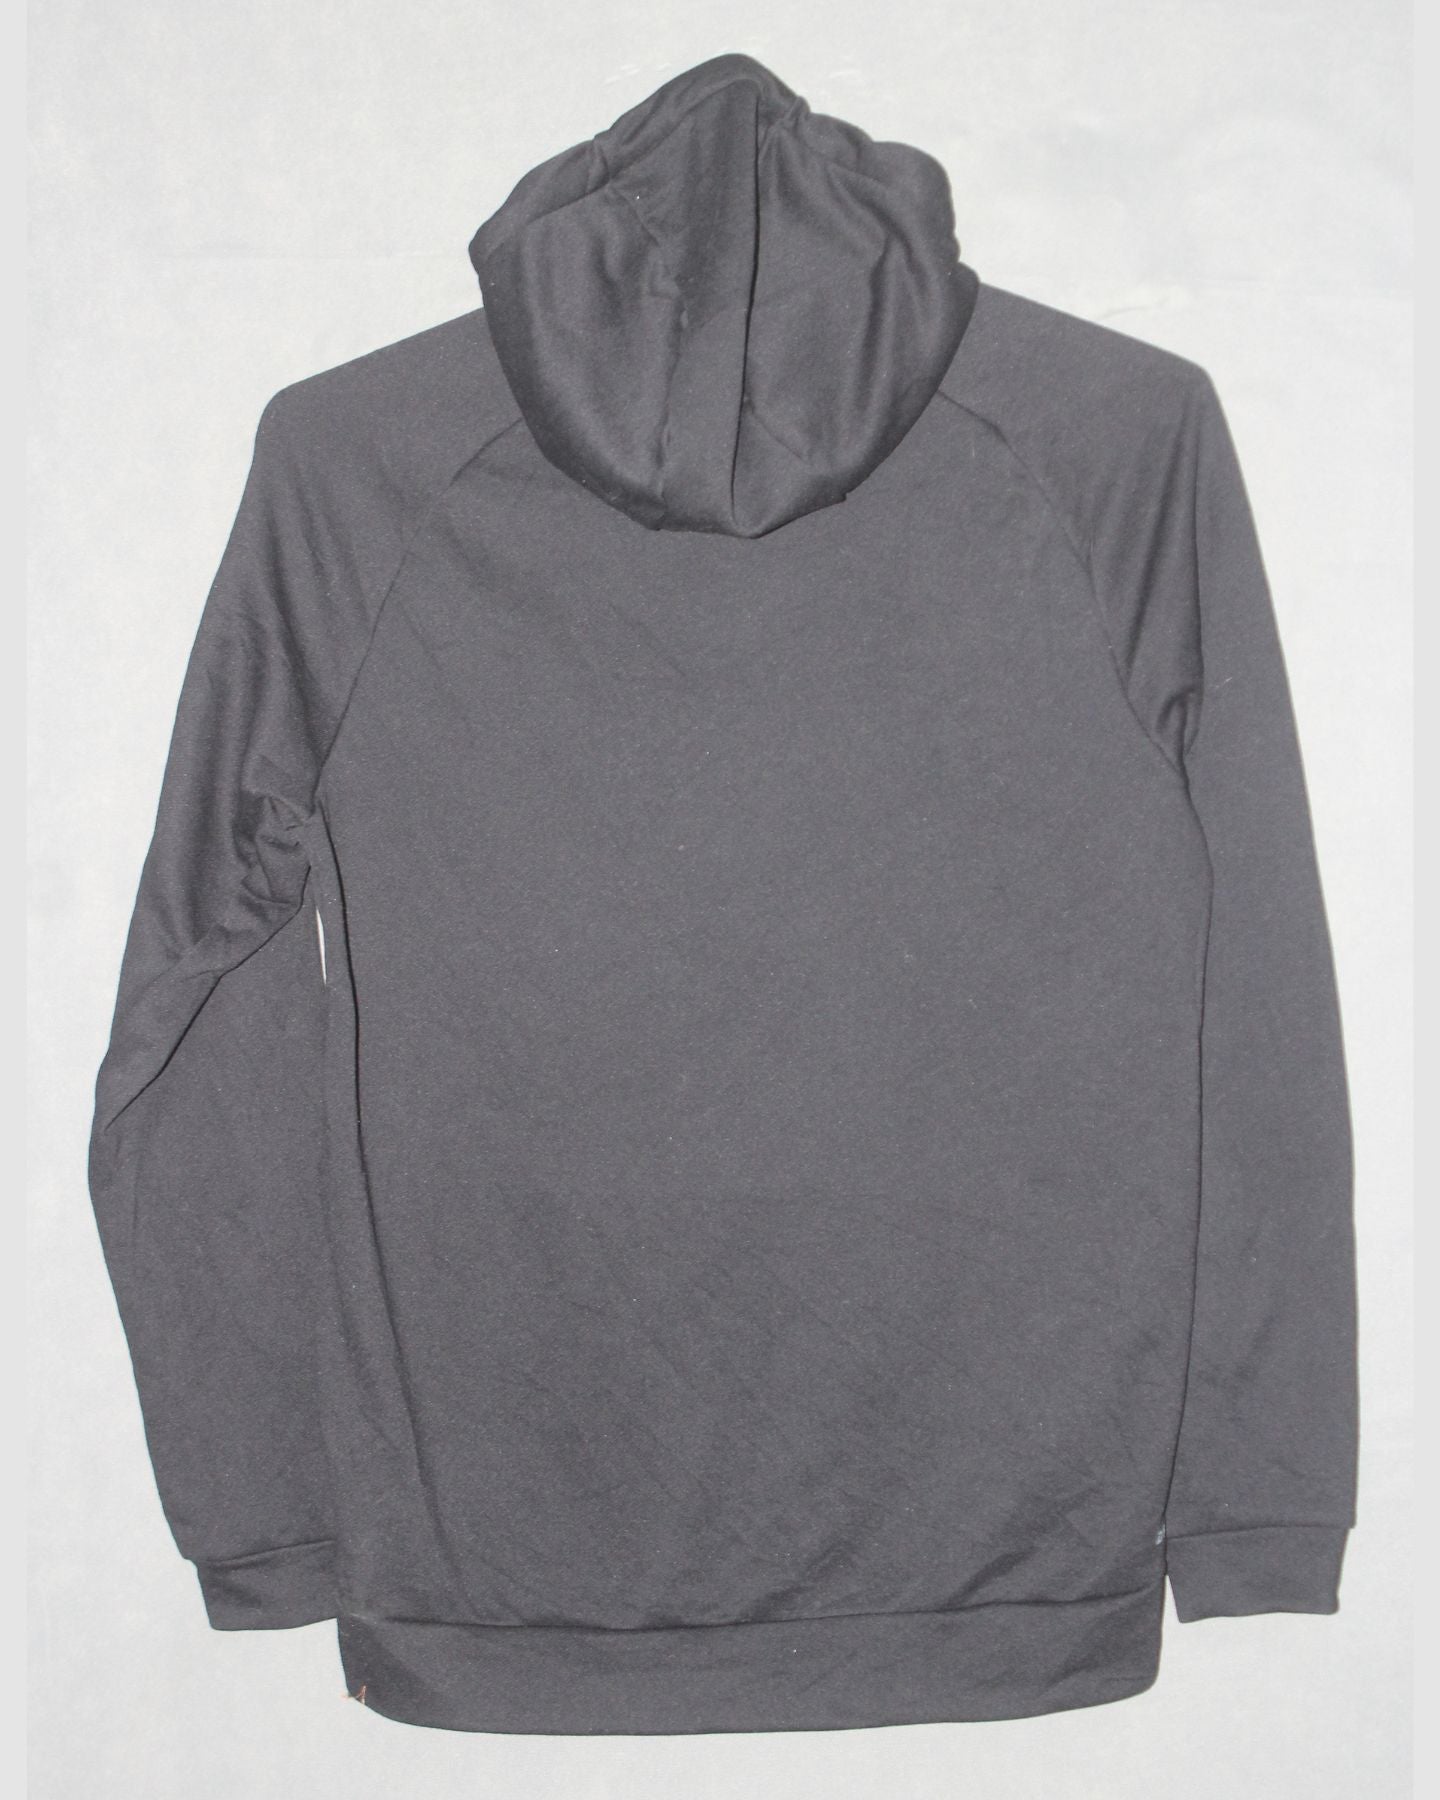 Nike Branded Original Fleece For Men Hoodie